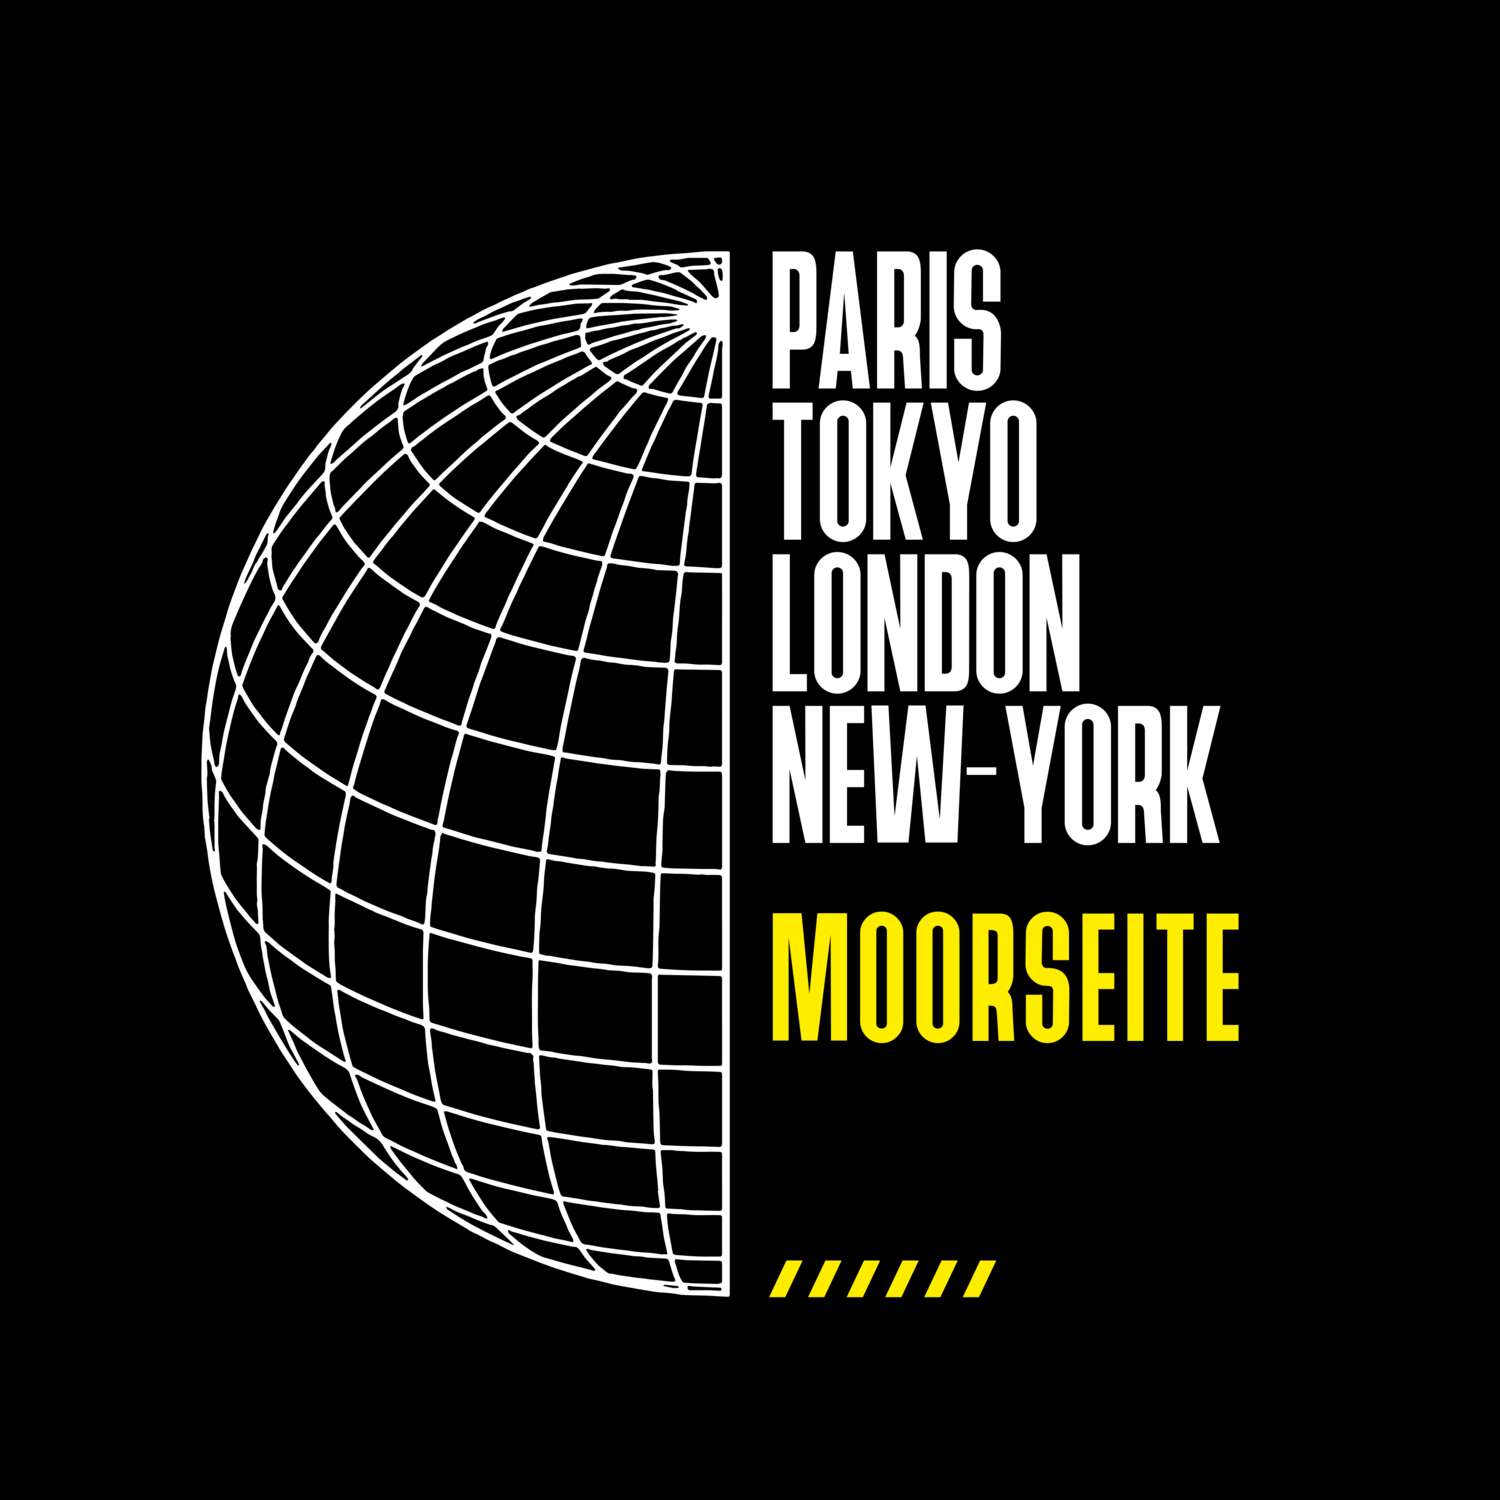 Moorseite T-Shirt »Paris Tokyo London«